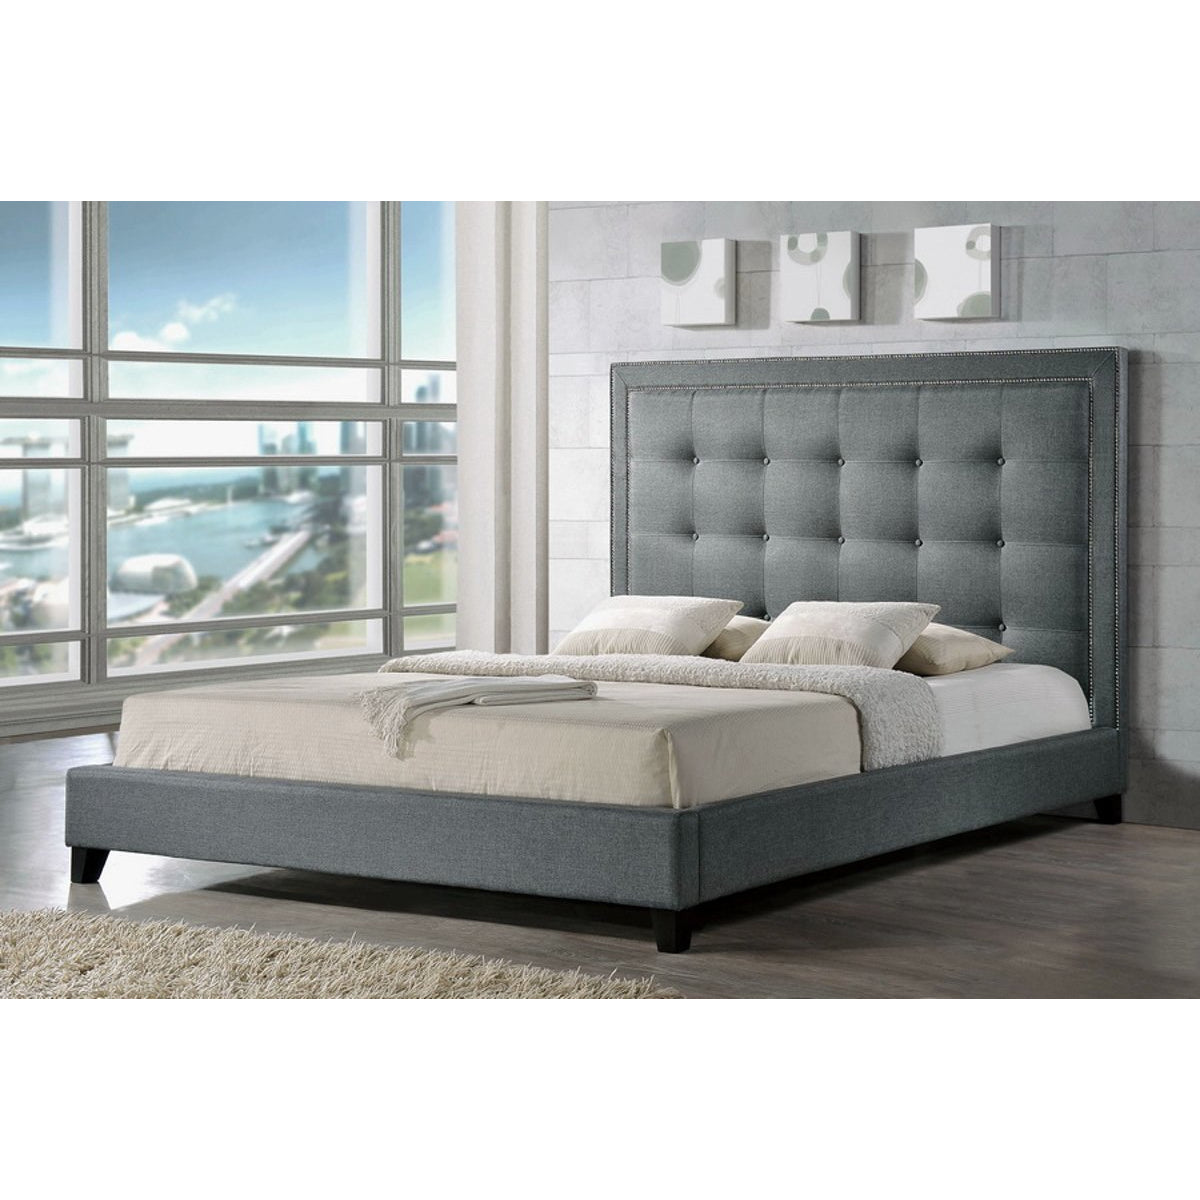 Baxton Studio Hirst Gray Platform Bed- King Size Baxton Studio-beds-Minimal And Modern - 1